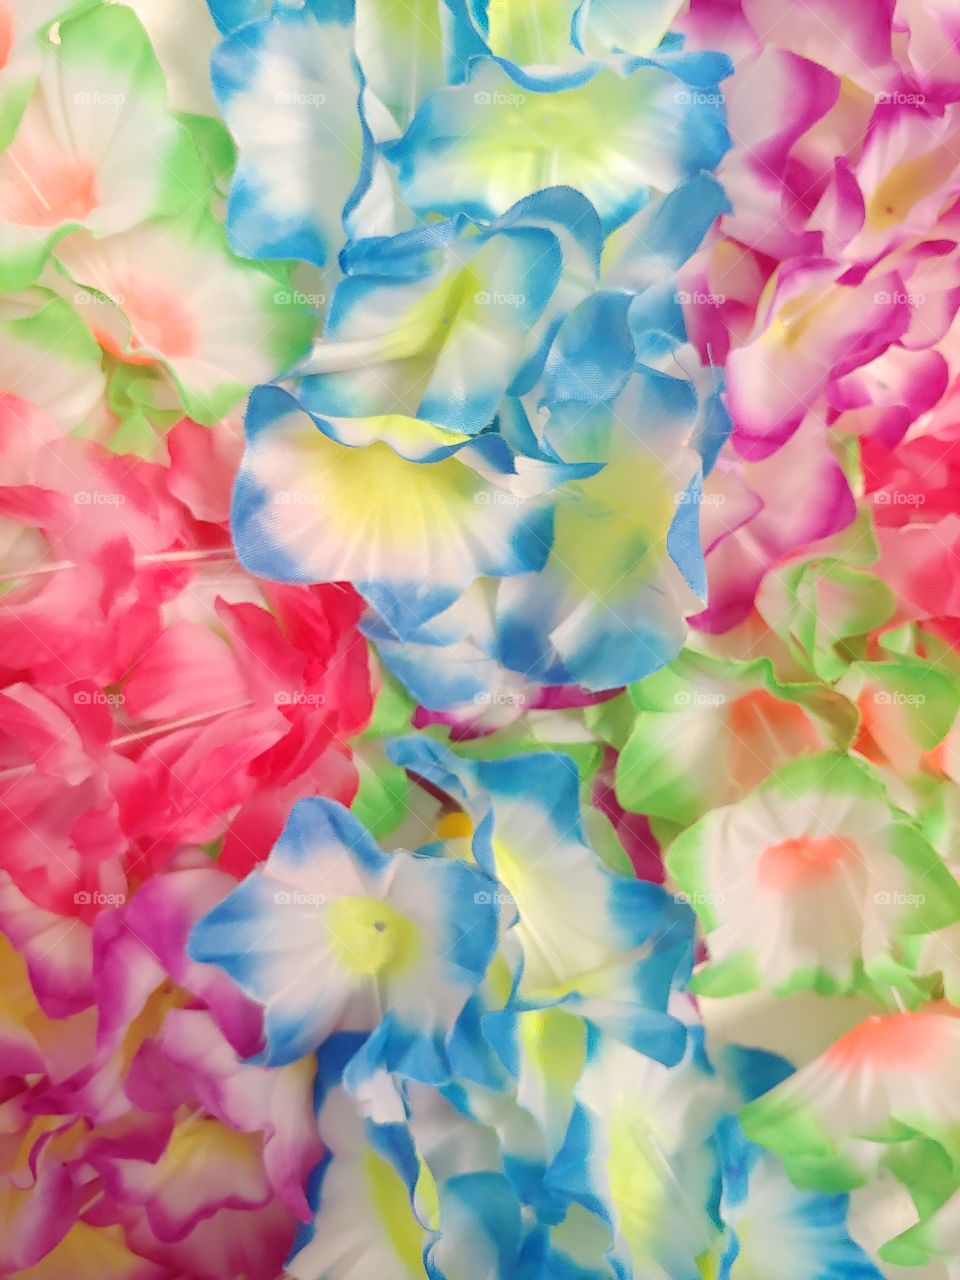 A Beautiful Array of Colorful Hawaiian Lei Flowers